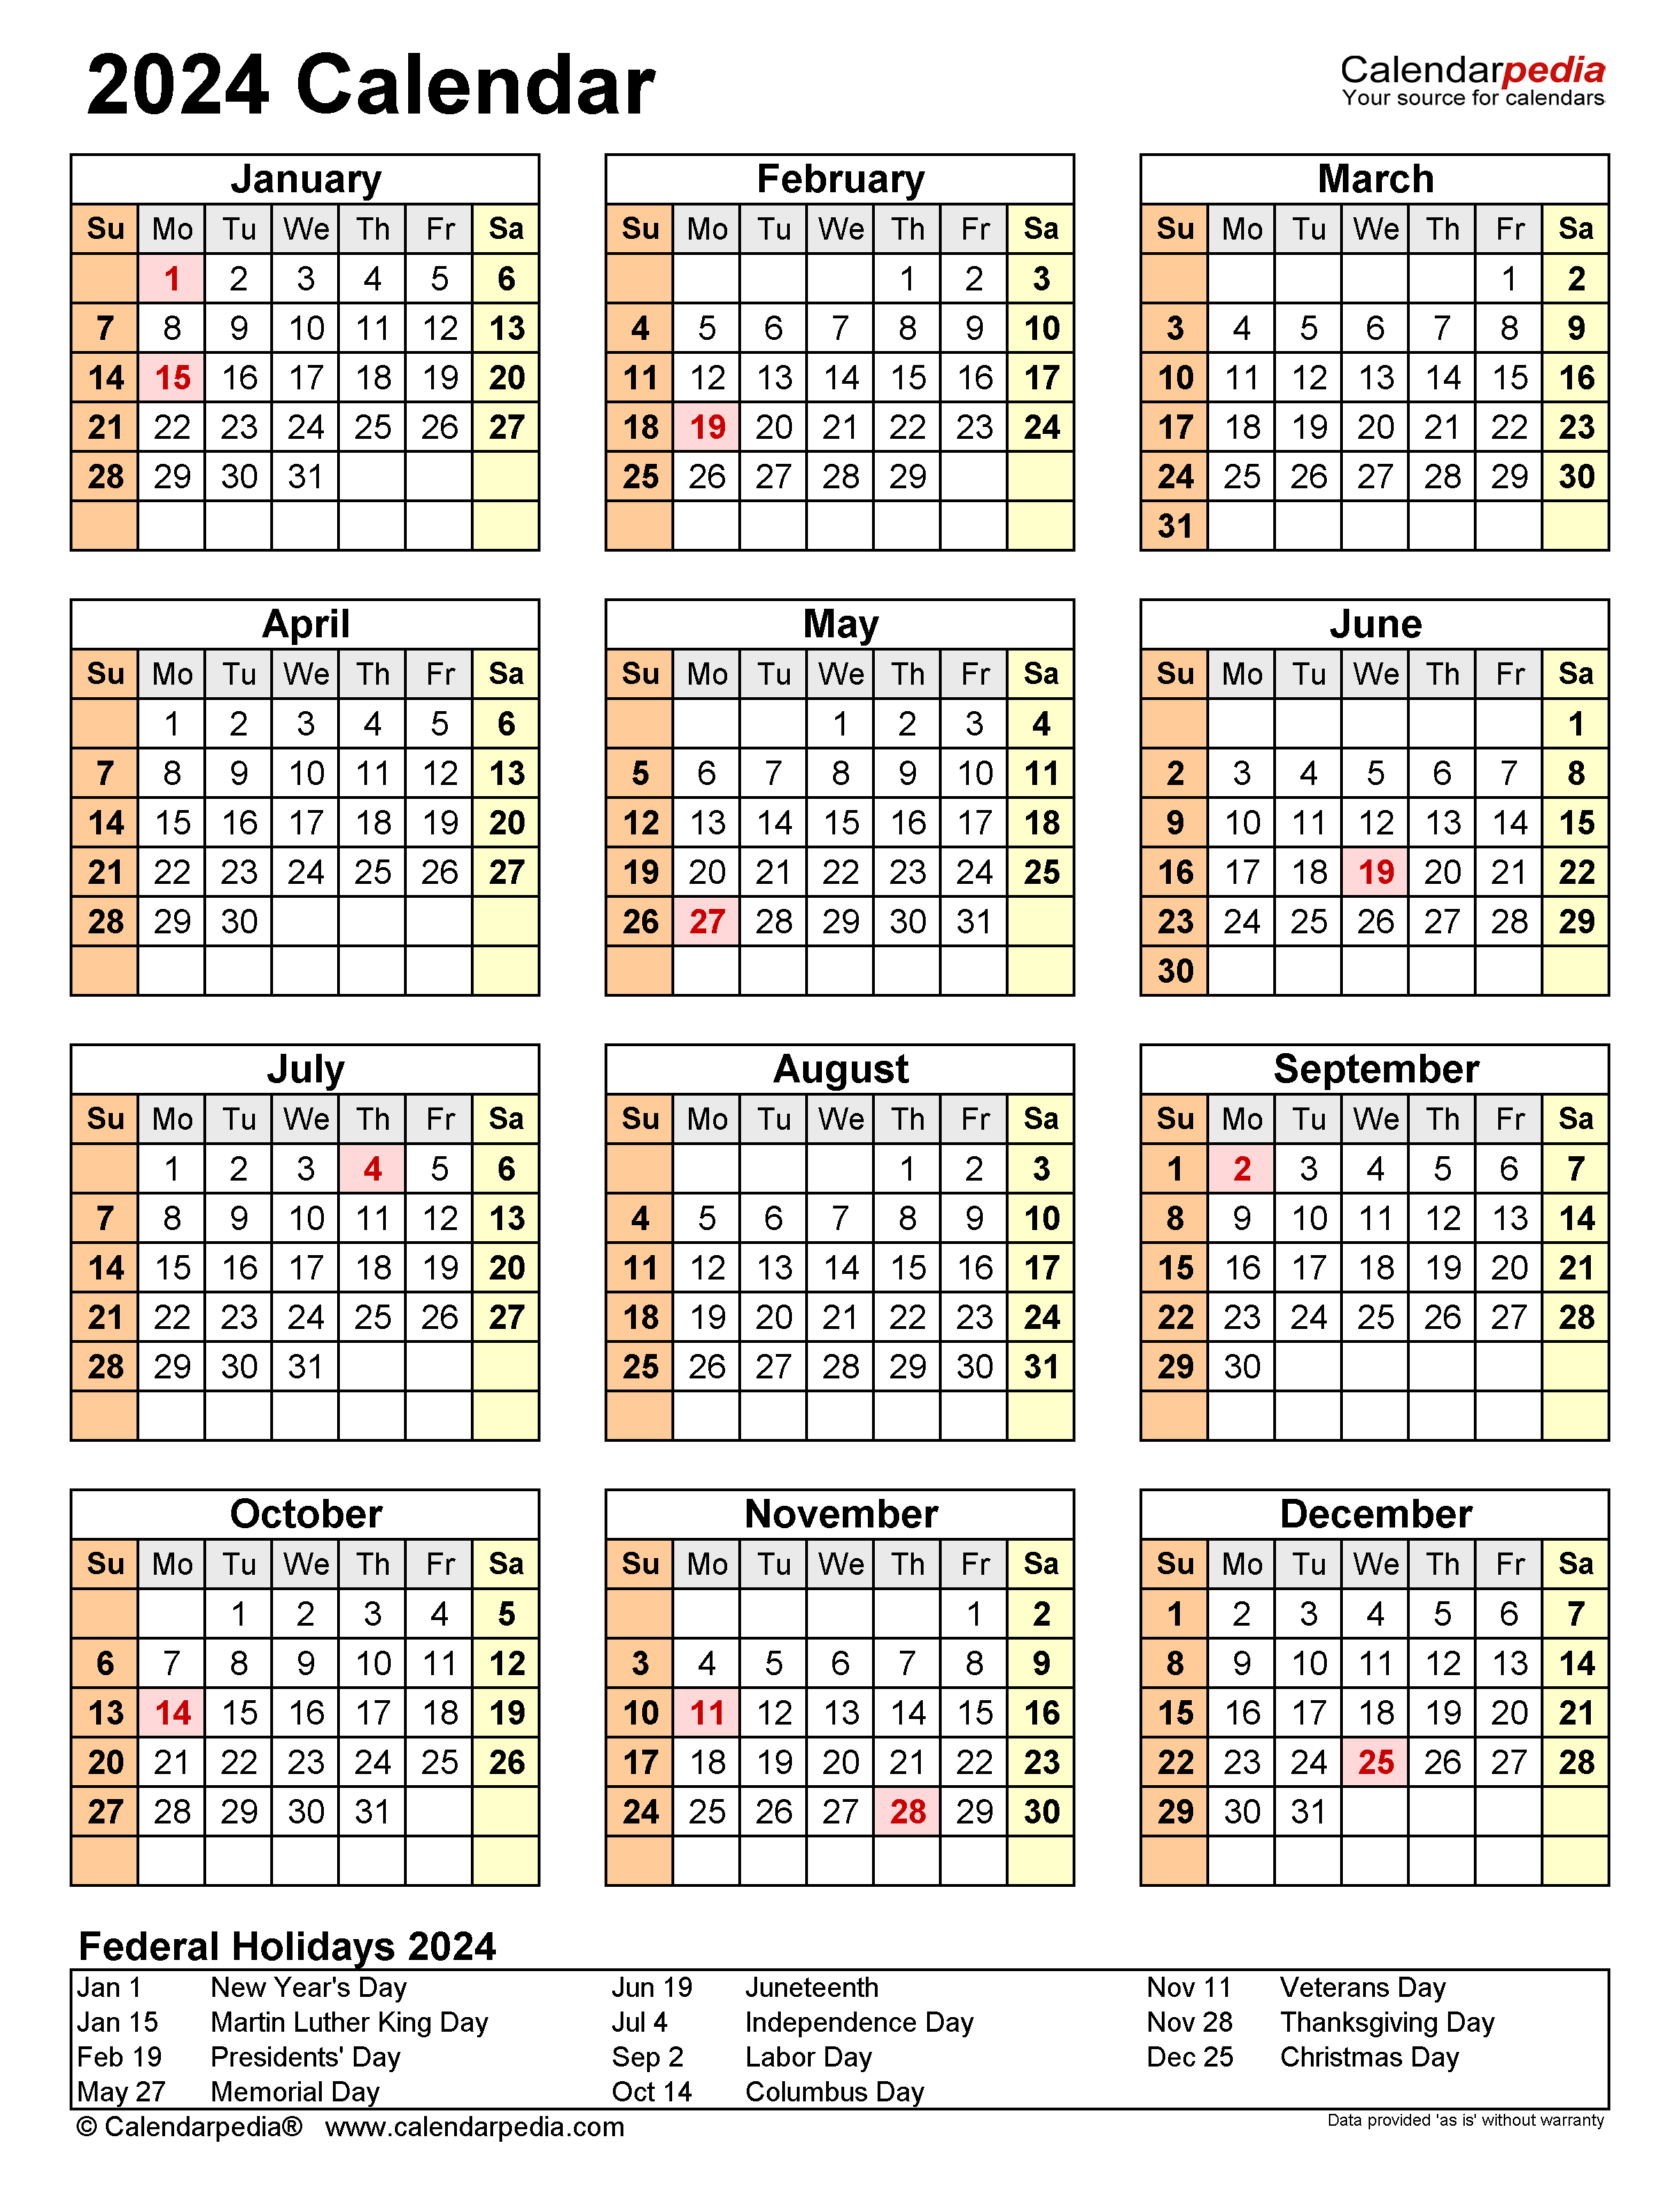 Free Printable 2024 Calendar With Holidays Crownflourmills | Free Printable 12 Month 2024 Calendar With Holidays